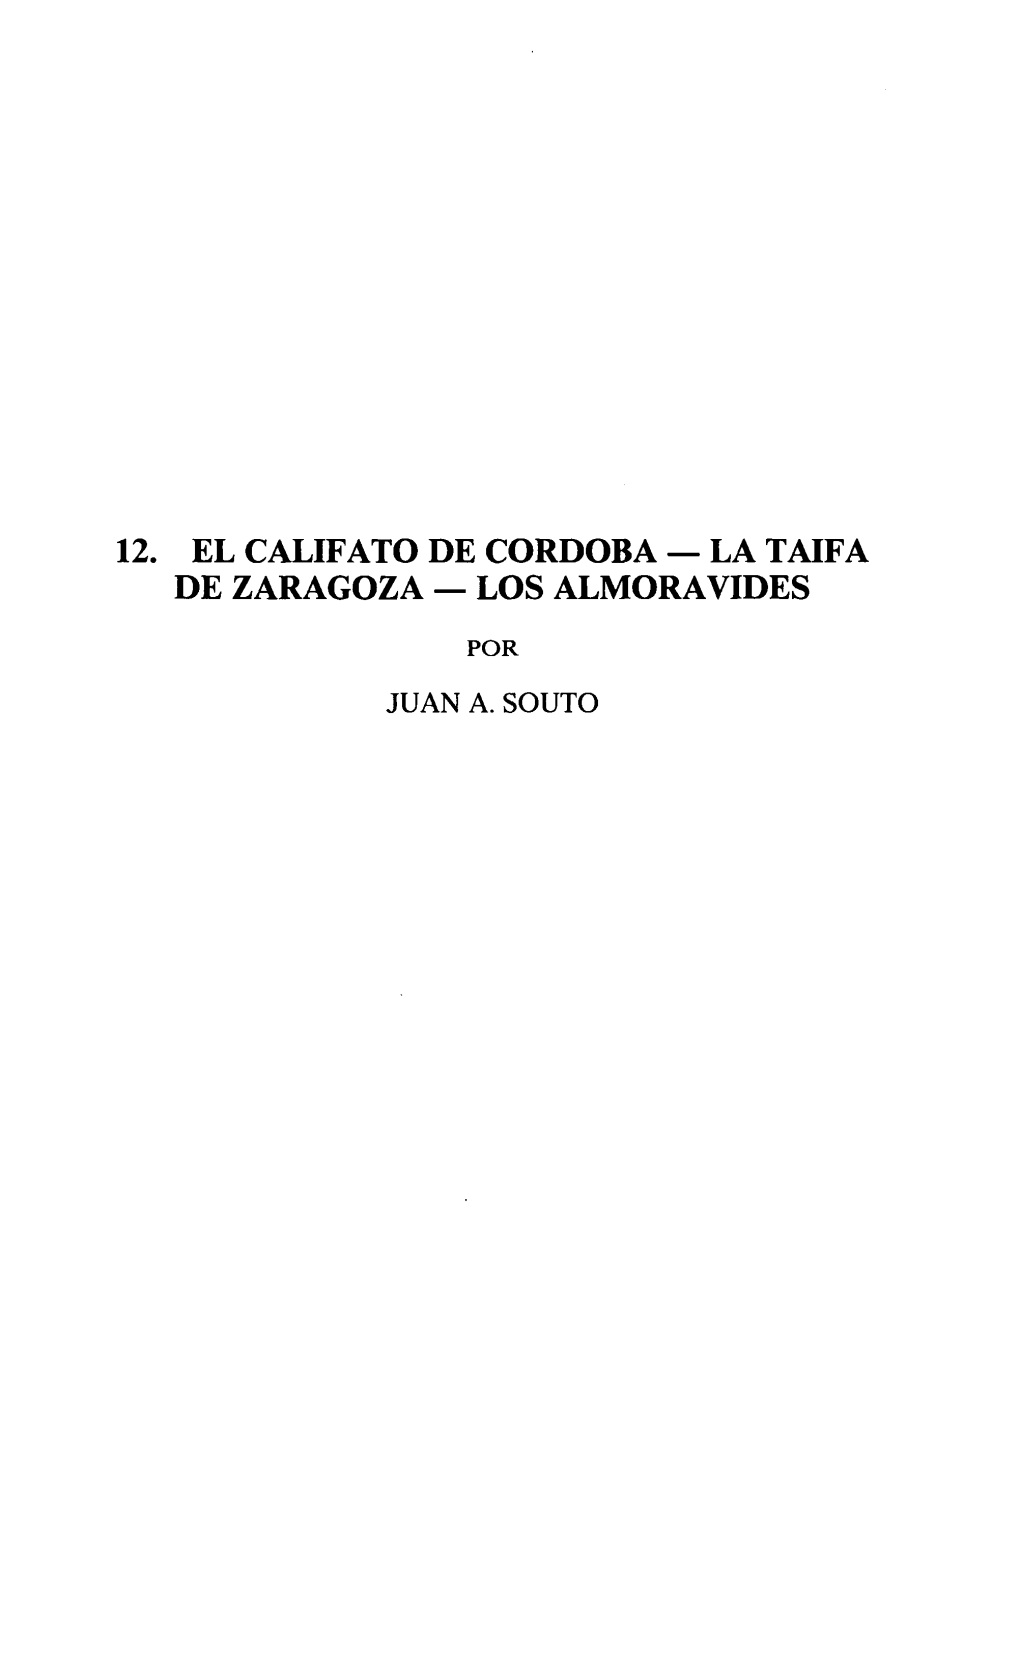 12. El Califato De Córdoba. La Taifa De Zaragoza. Los Almorávides, Por